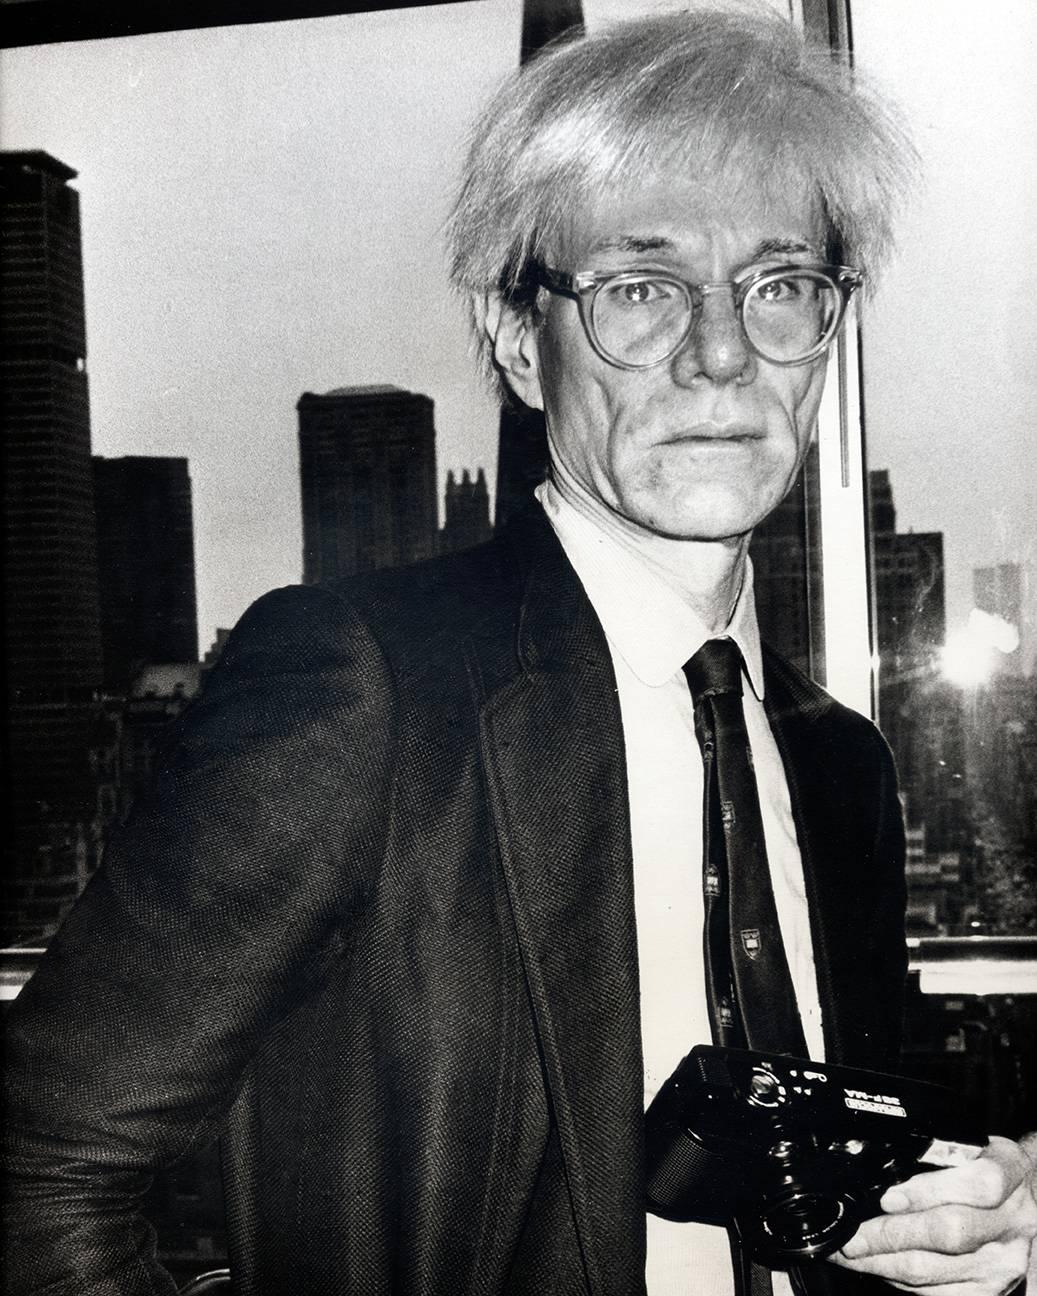 Fernando Natalici Black and White Photograph - ANDY WARHOL, New York, 1978